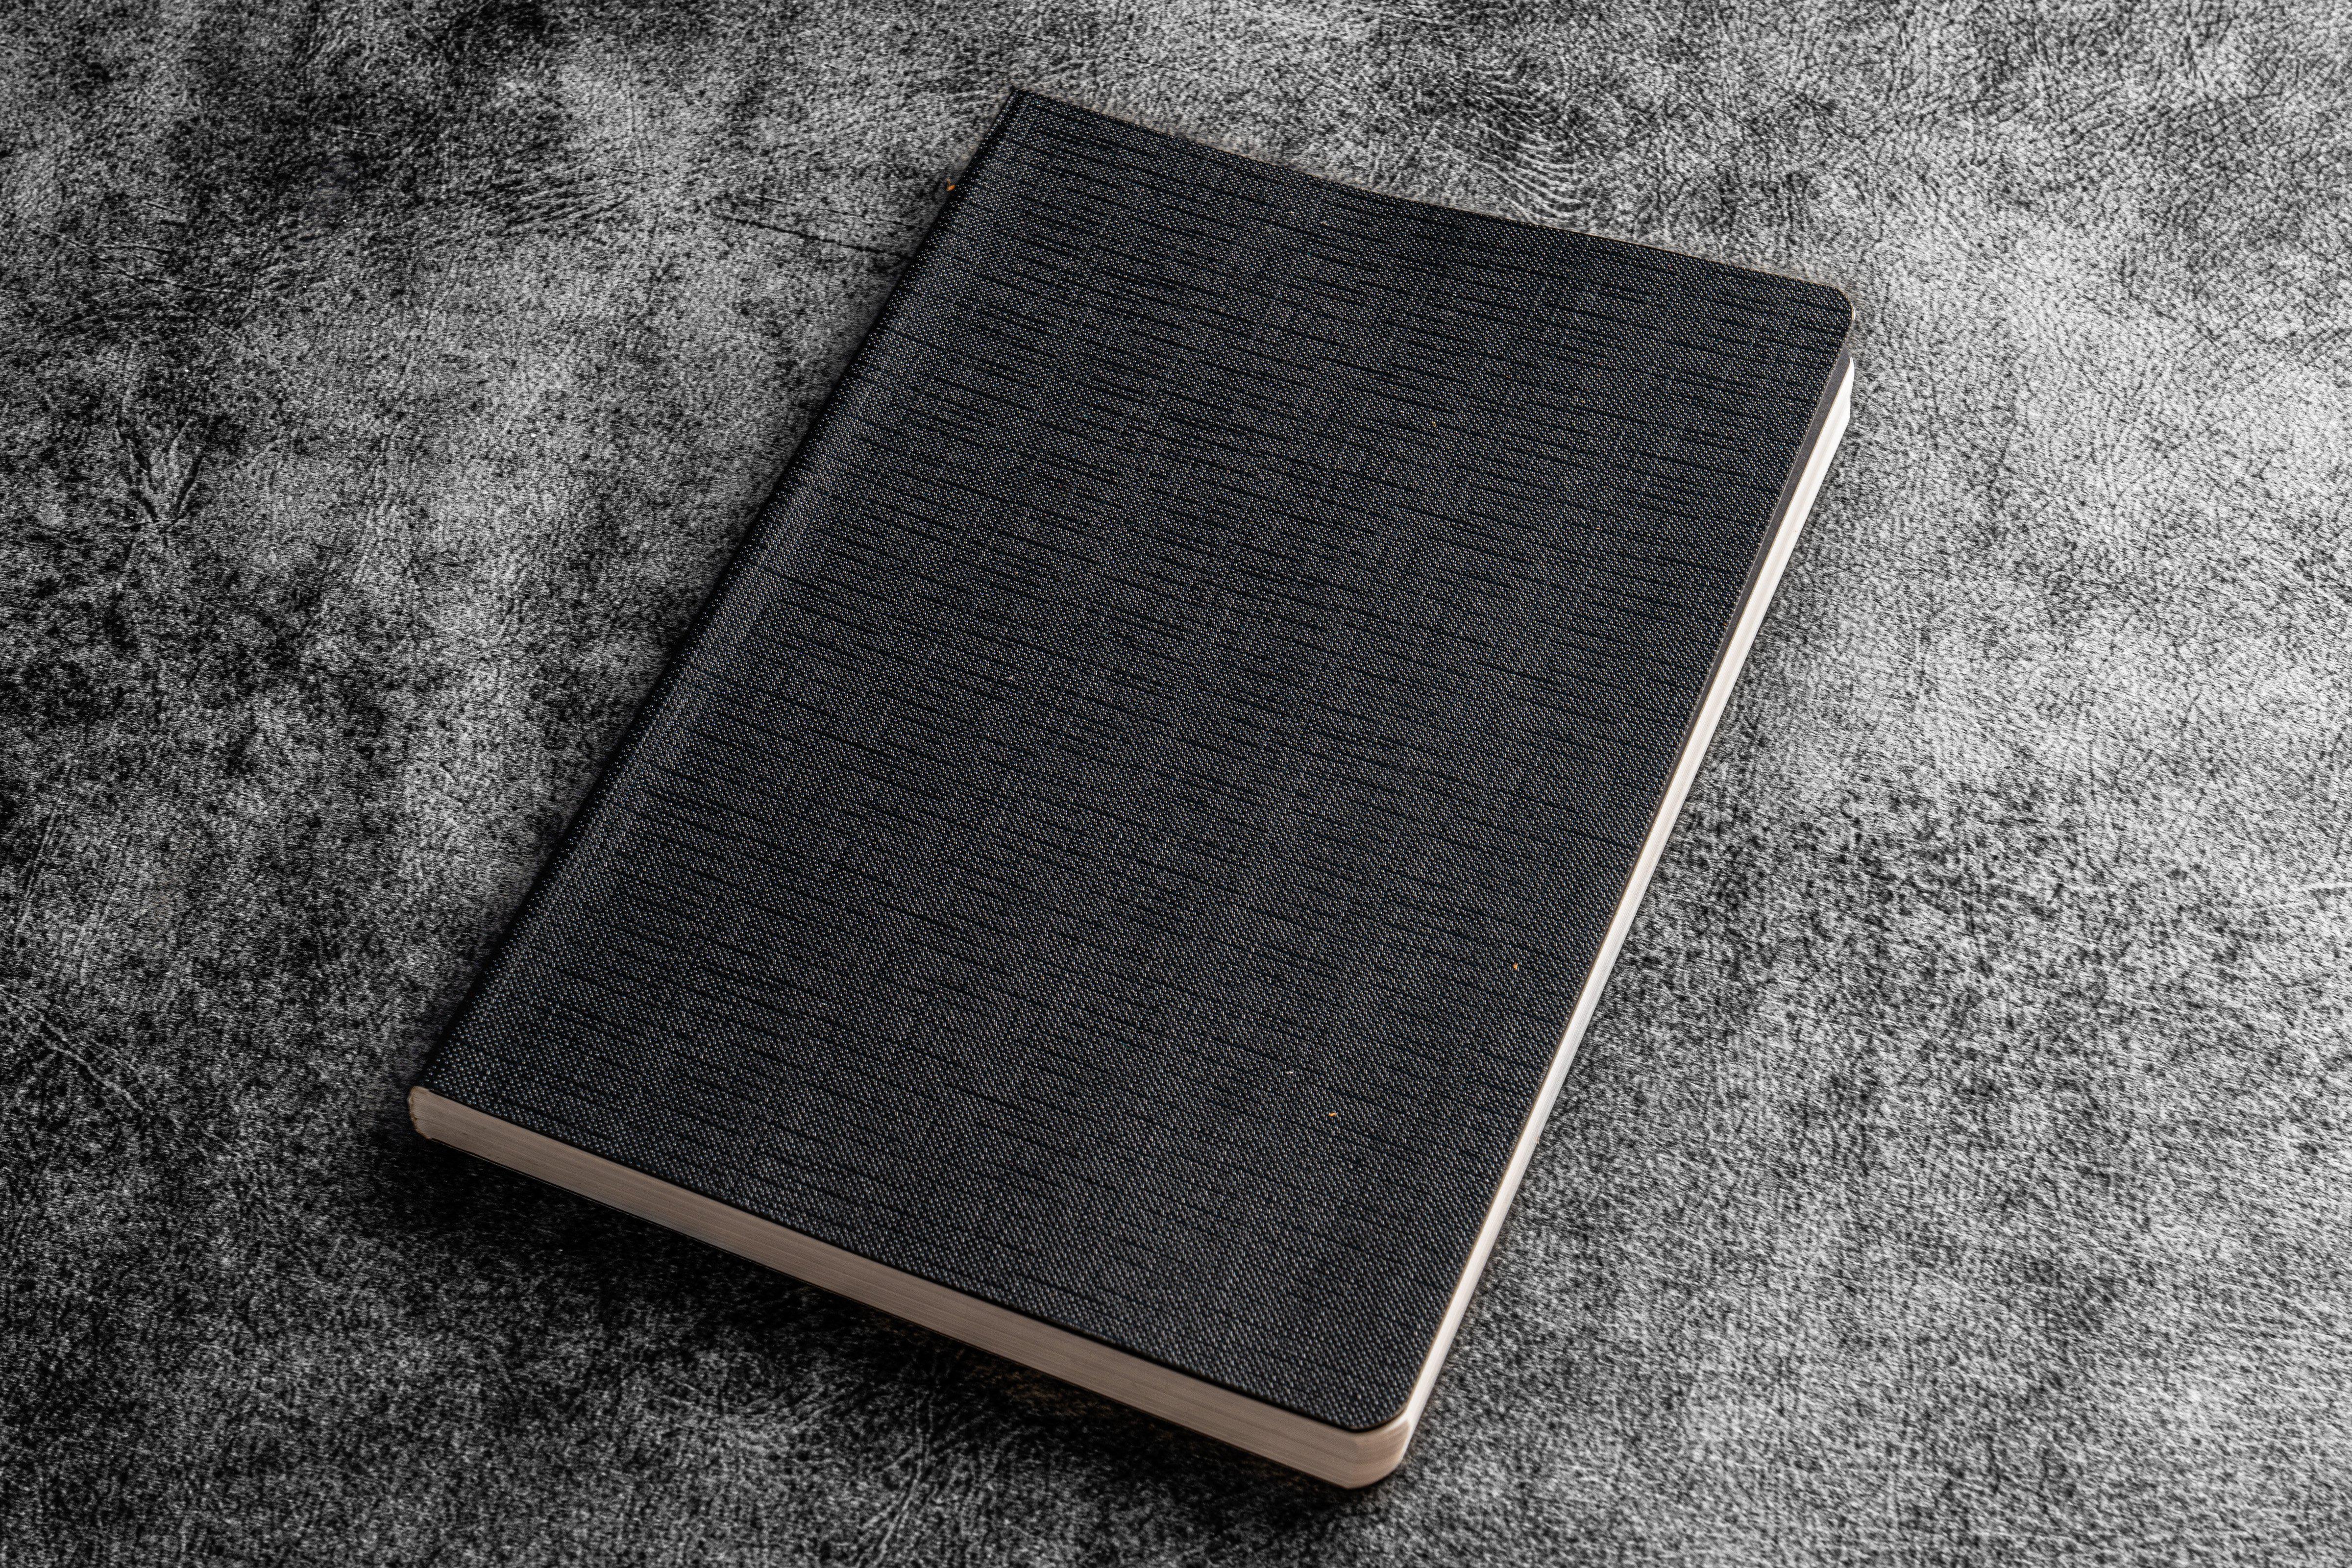 Luxury Leather Bound Soft Cover Sketch Book - Dark Brown Plain